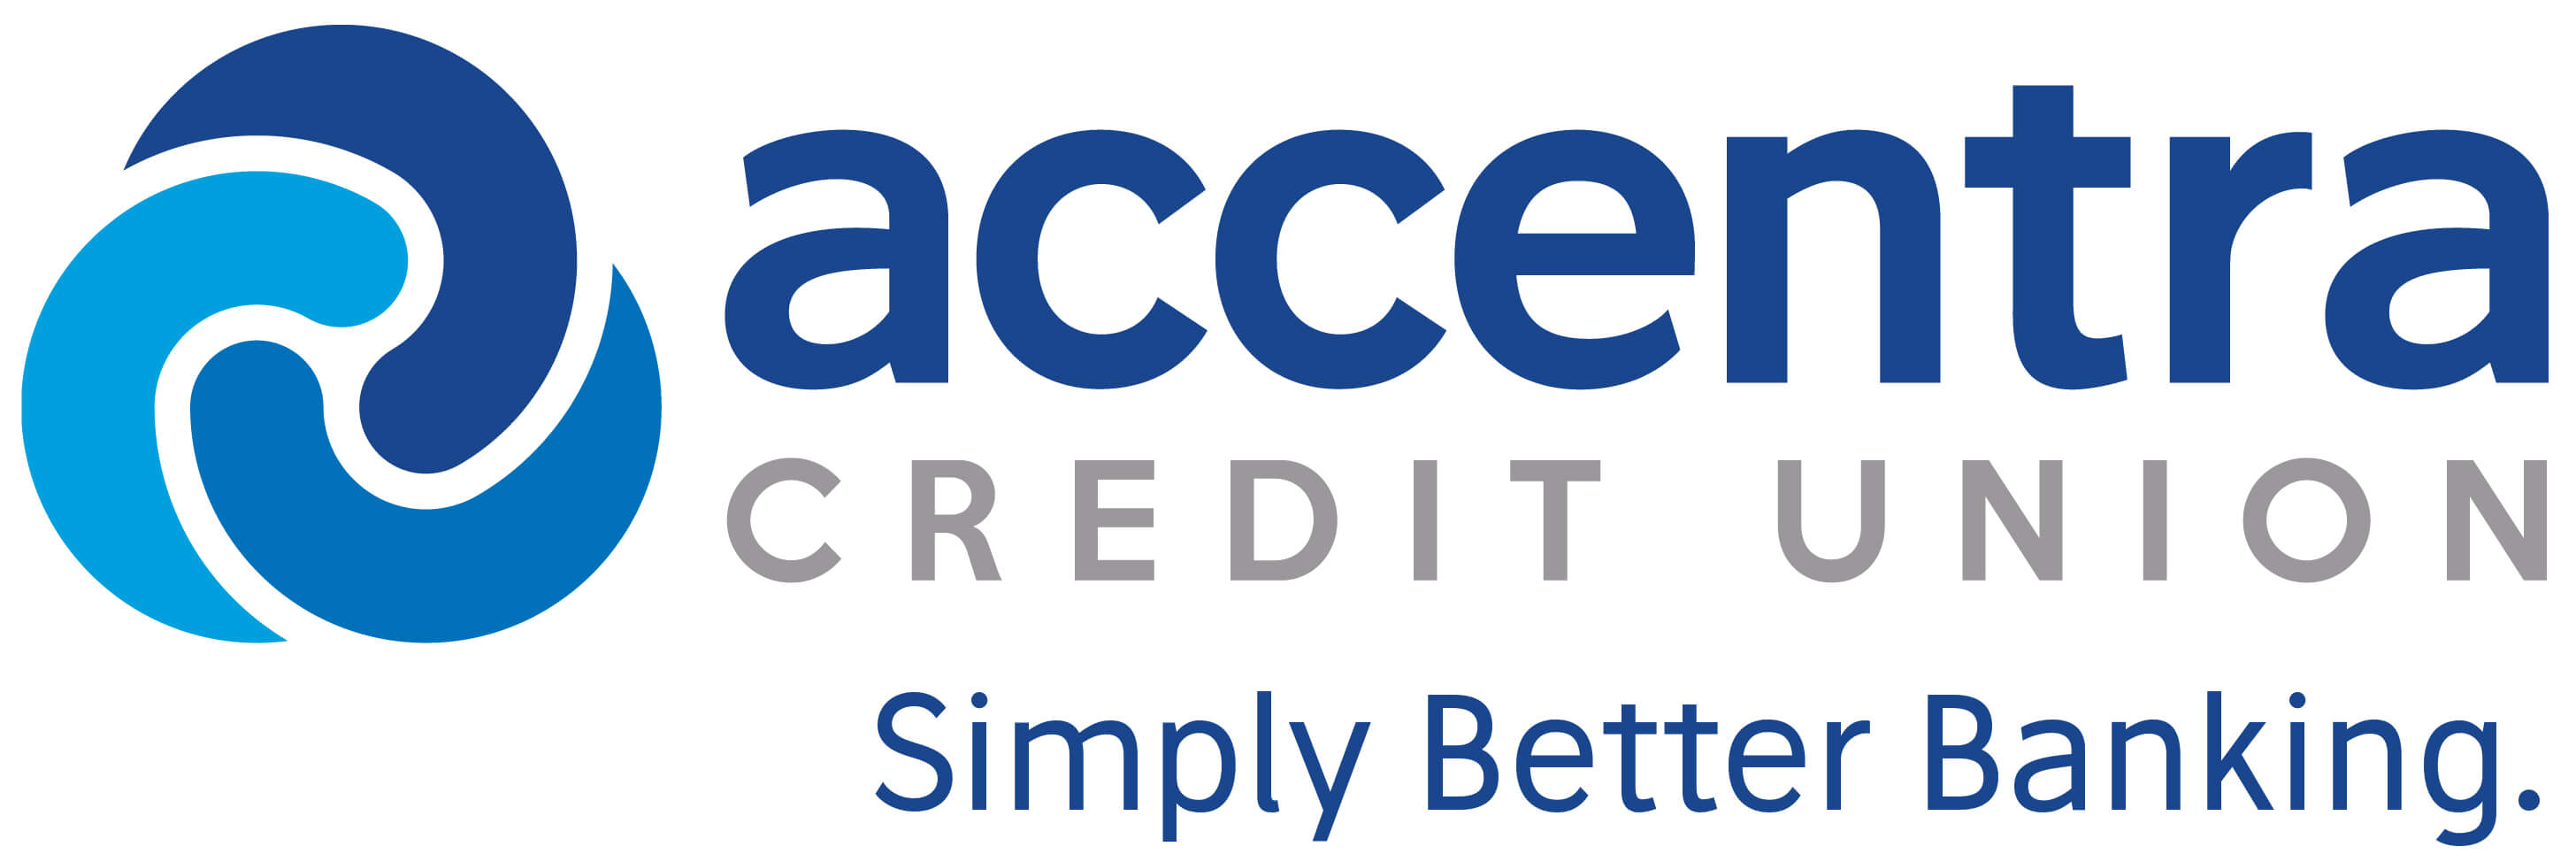 Accentra Credit Union logo